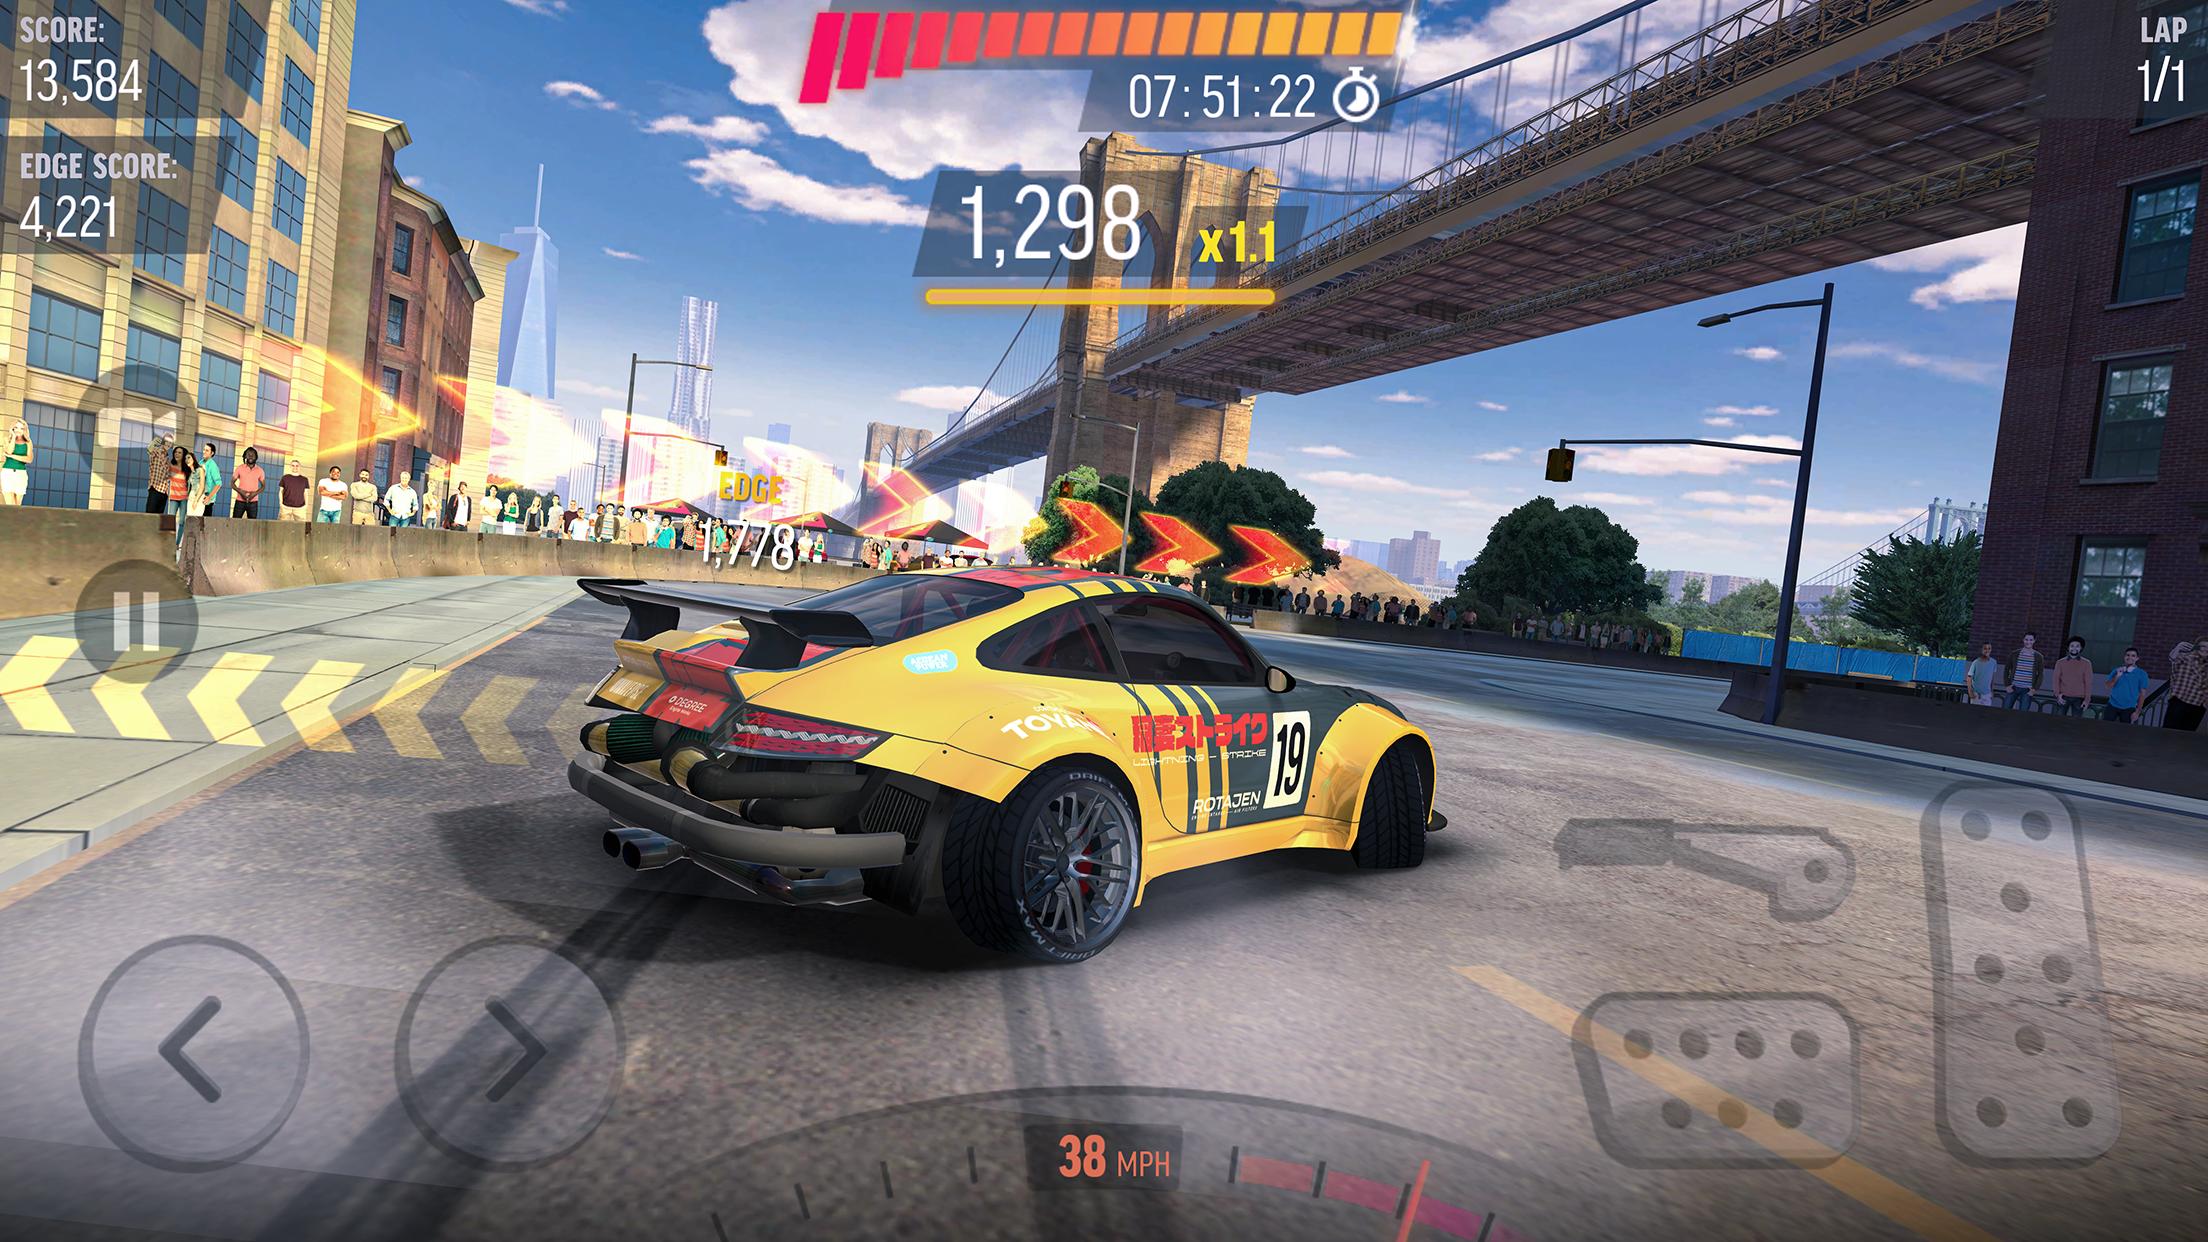 Drift Max Pro Car Drifting Game with Racing Cars 2.4.60 Screenshot 18